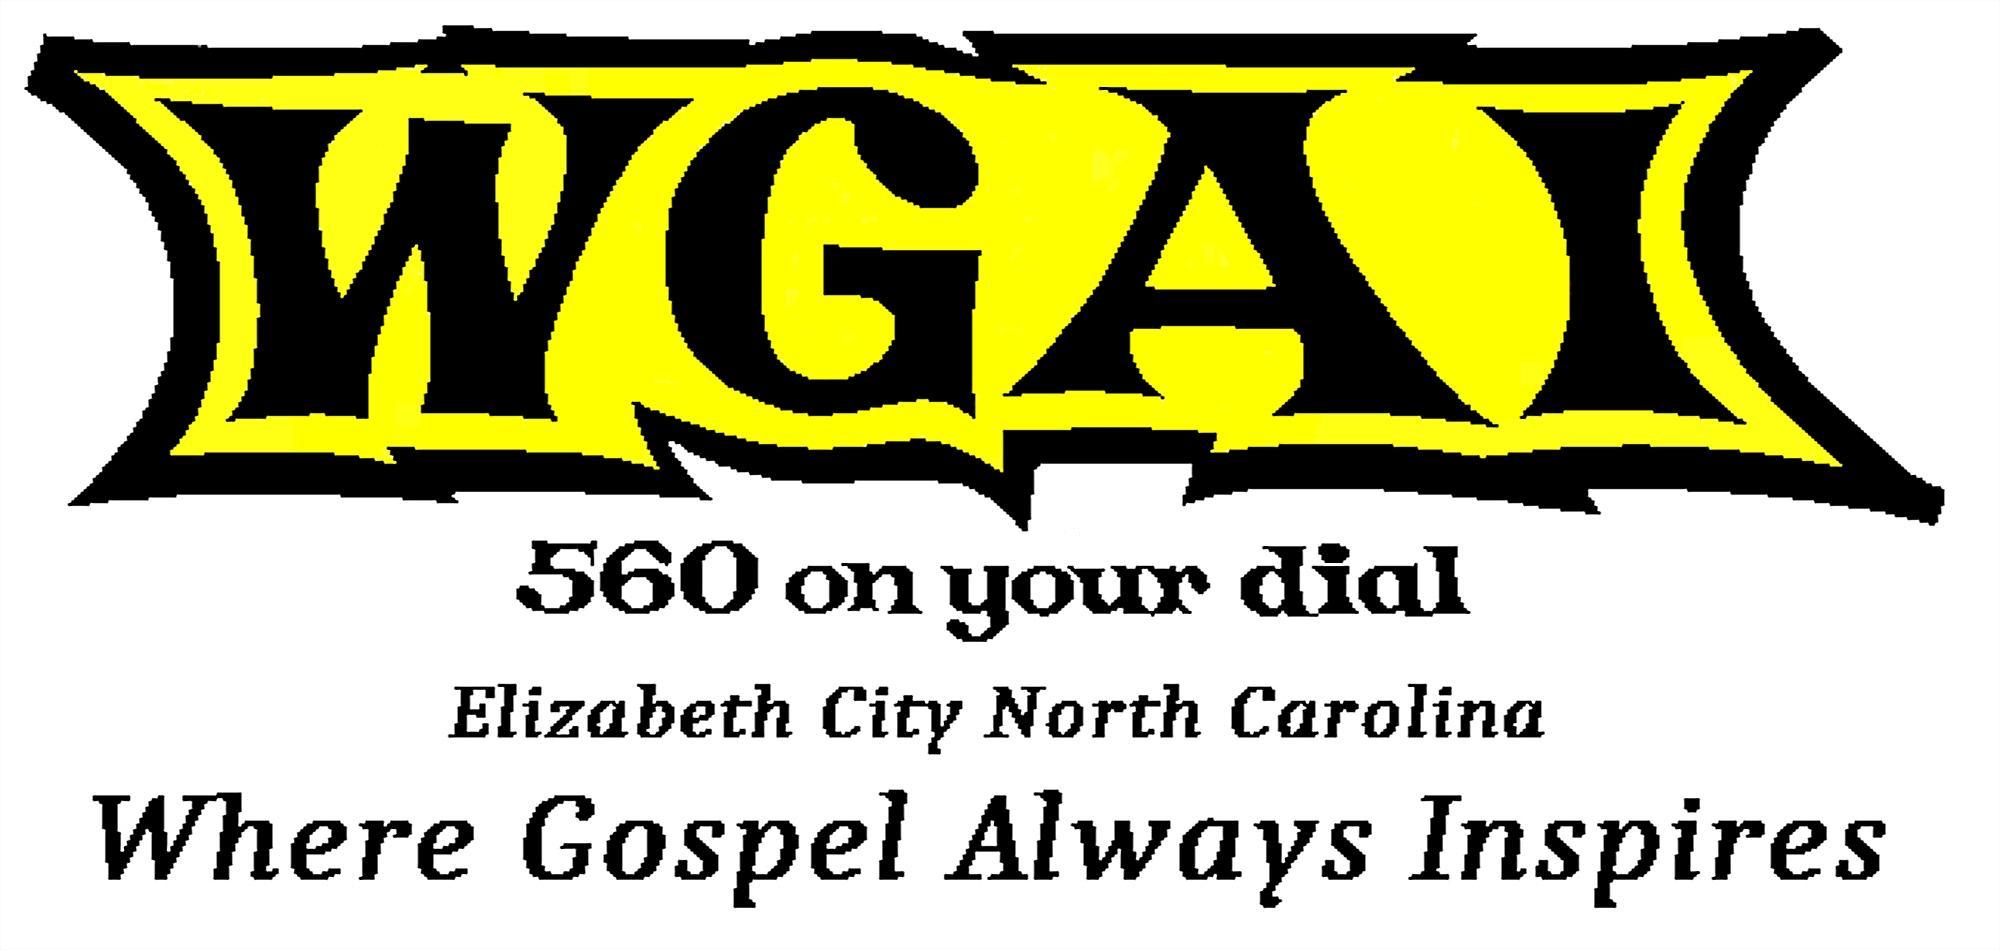 WGAI-AM 560 Elizabeth City, NC, Where Gospel Always Inspires